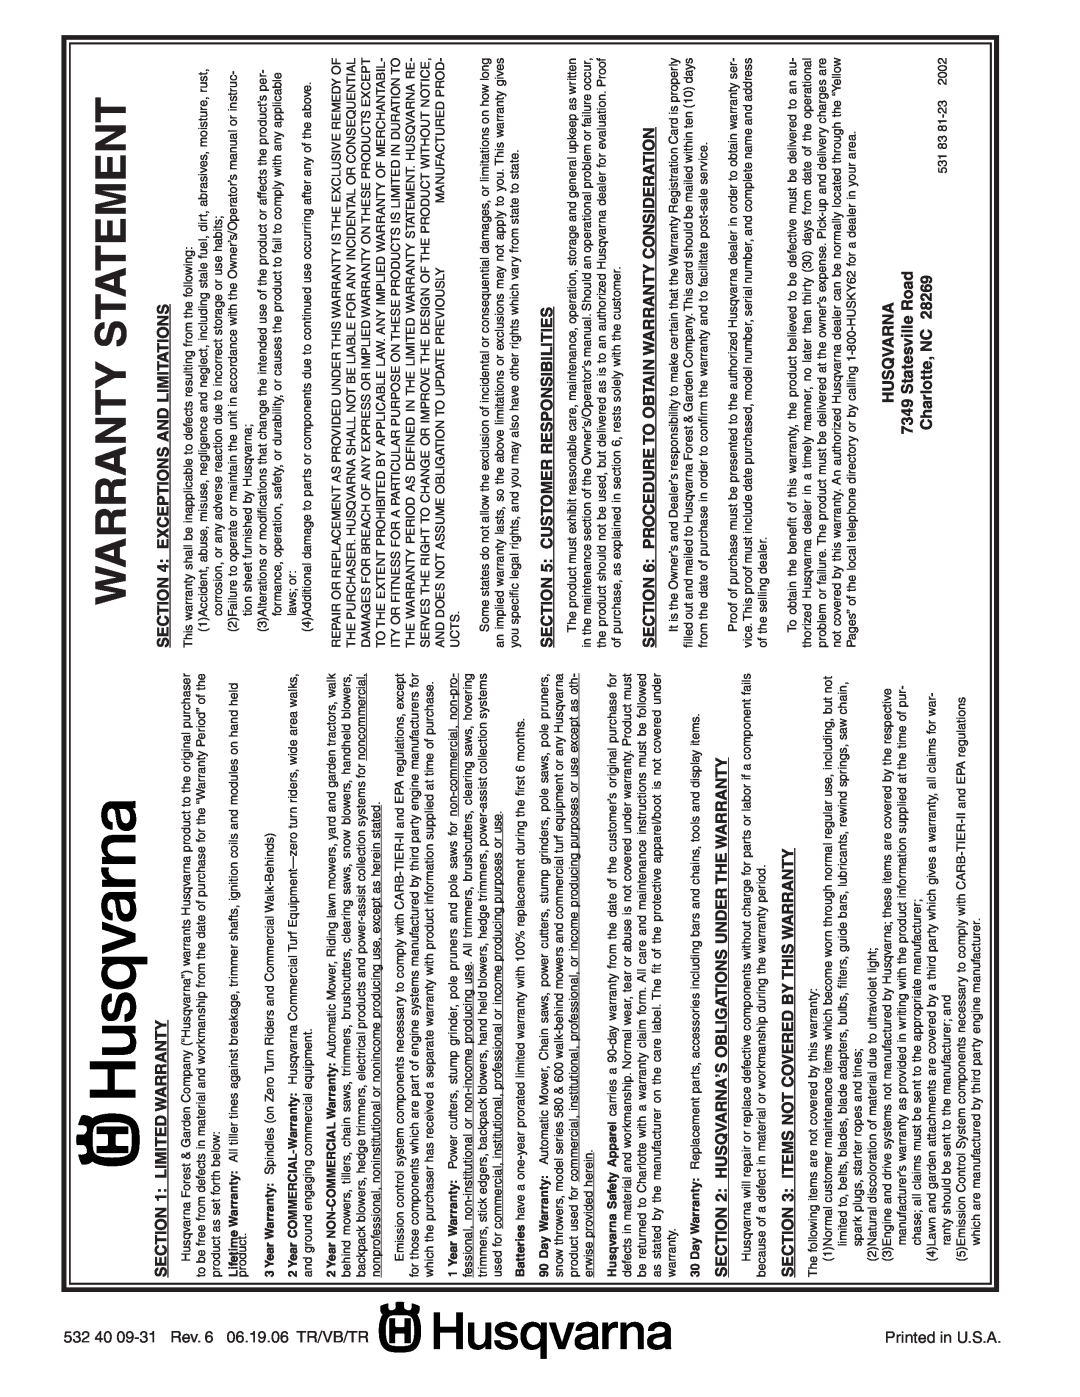 Husqvarna YTH20F42T Warranty Statement, 532 40 09-31 Rev. 6 06.19.06 TR/VB/TR Printed in U.S.A, Limited Warranty 